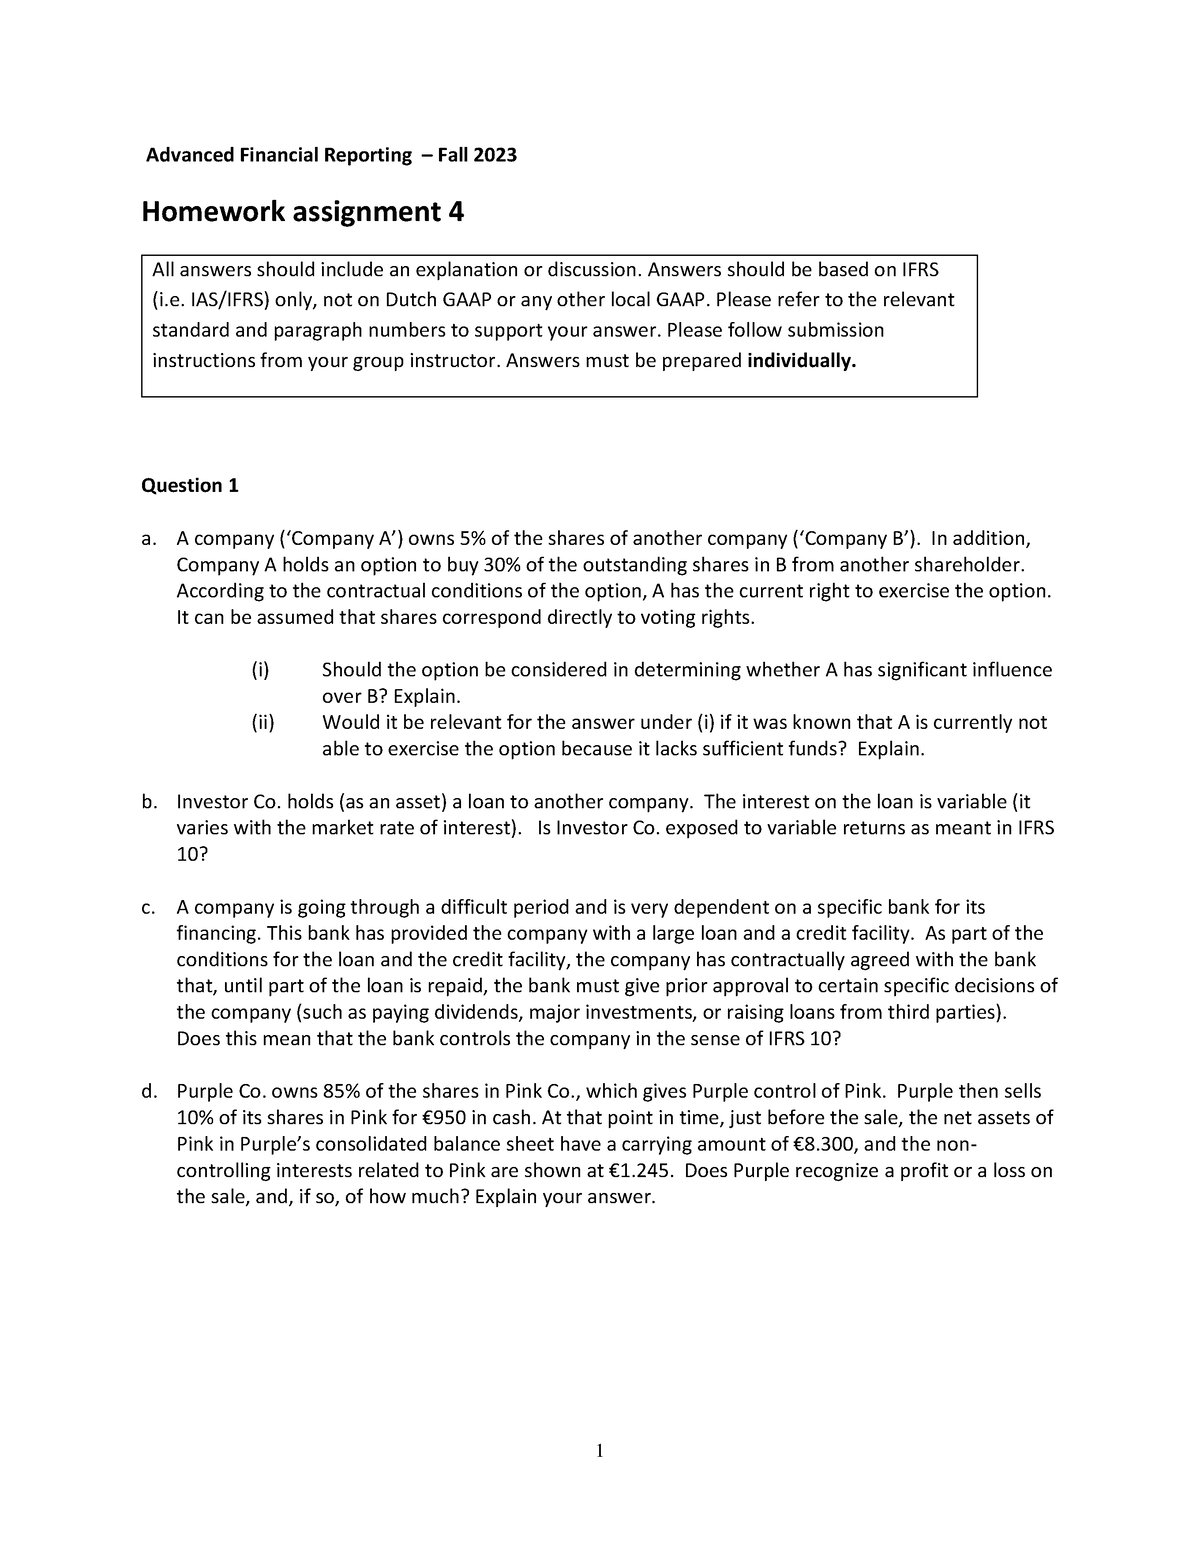 Afr 2023 Homework Assignment 4 1 Advanced Financial Reporting Fall